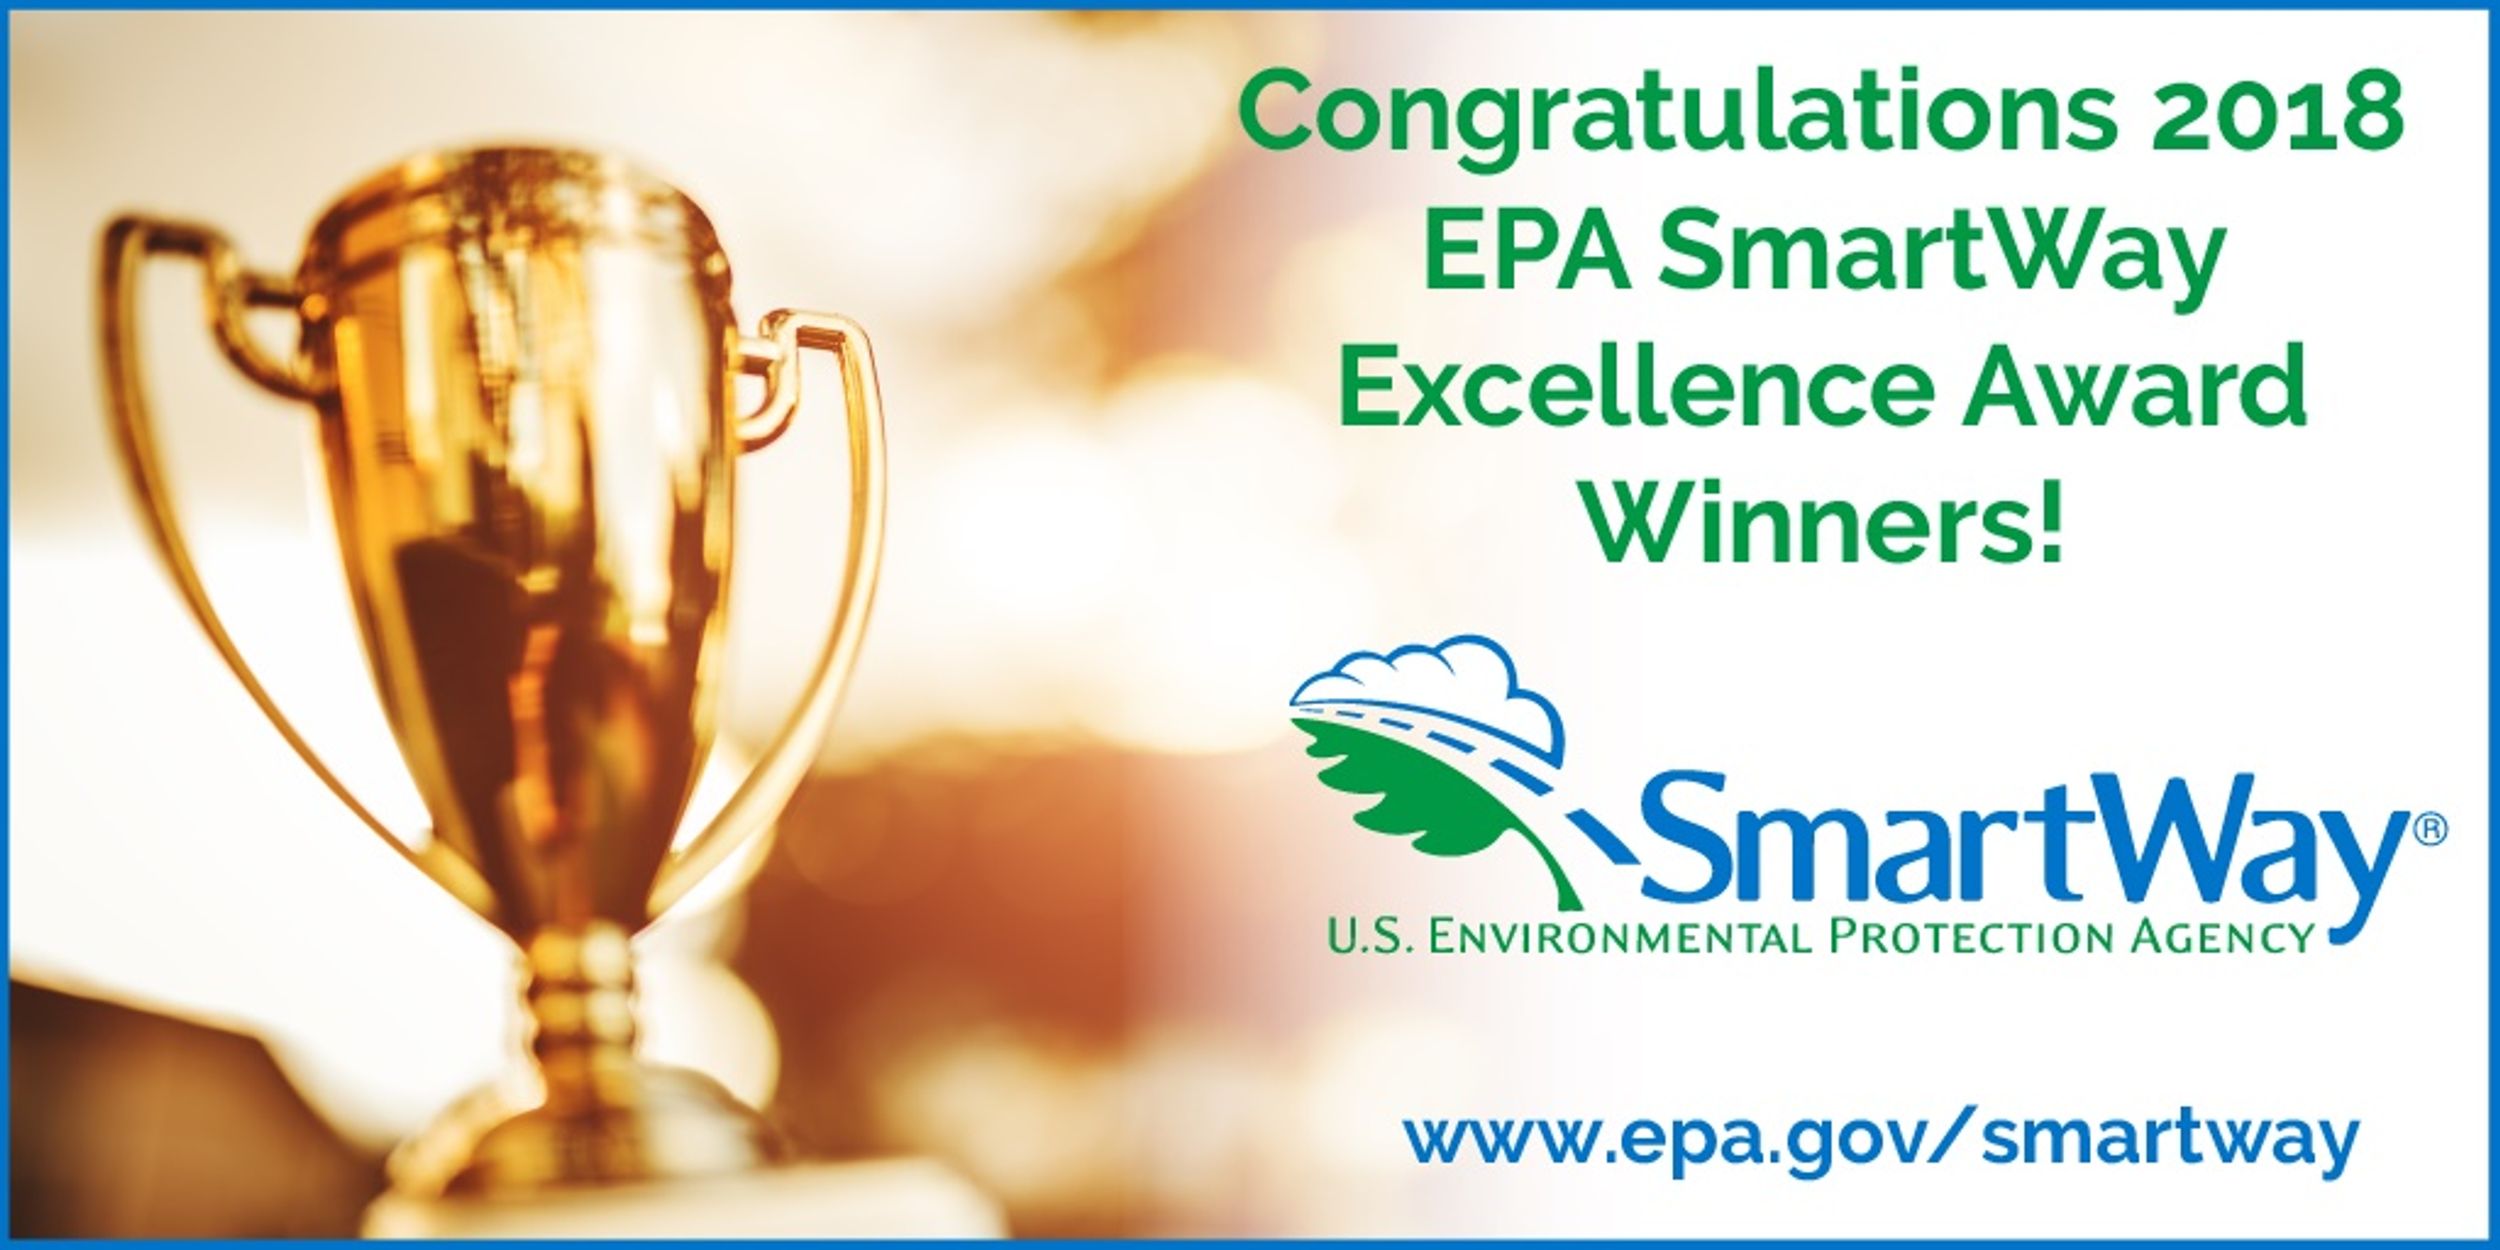 Penske Logistics Receives Freight Carrier Excellence Award from U.S. EPA SmartWay